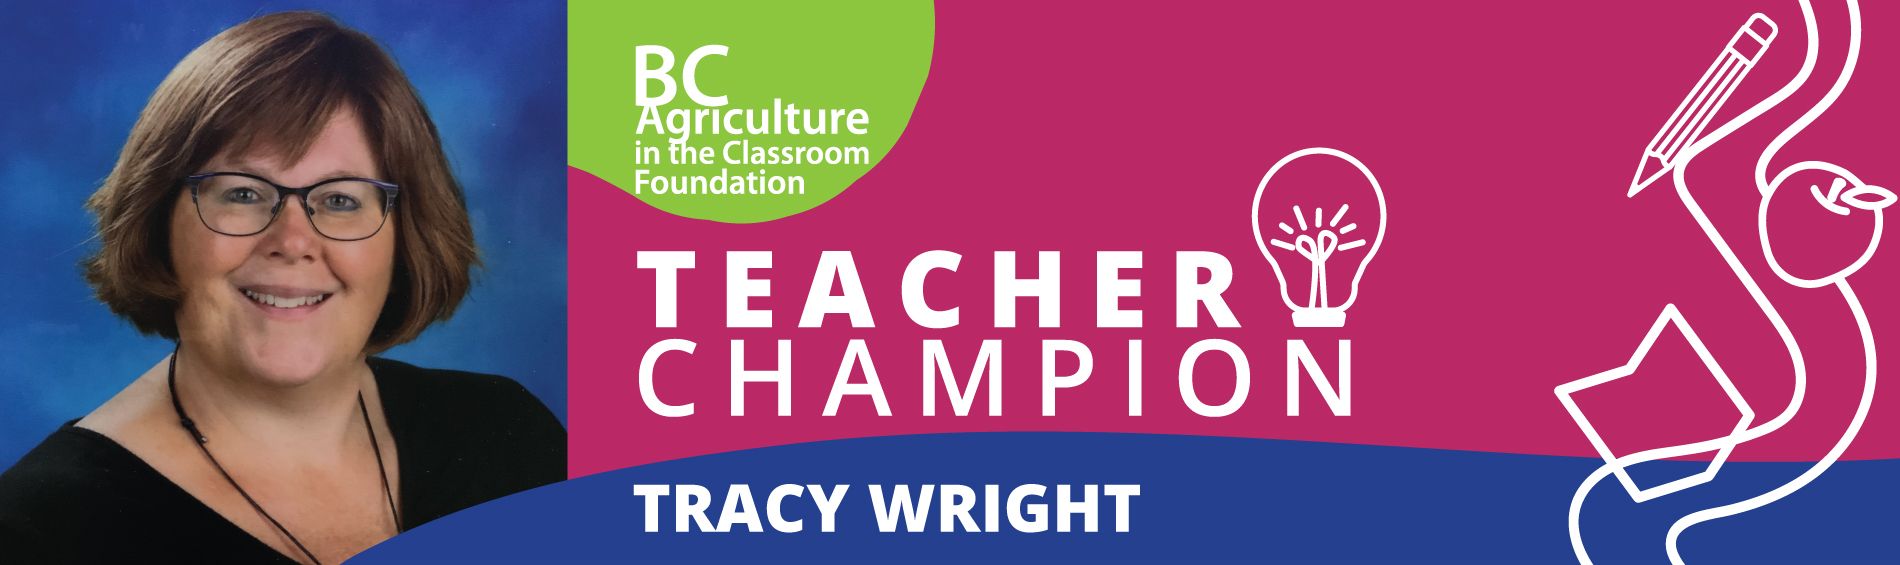 Teacher Champion - Tracy Wright